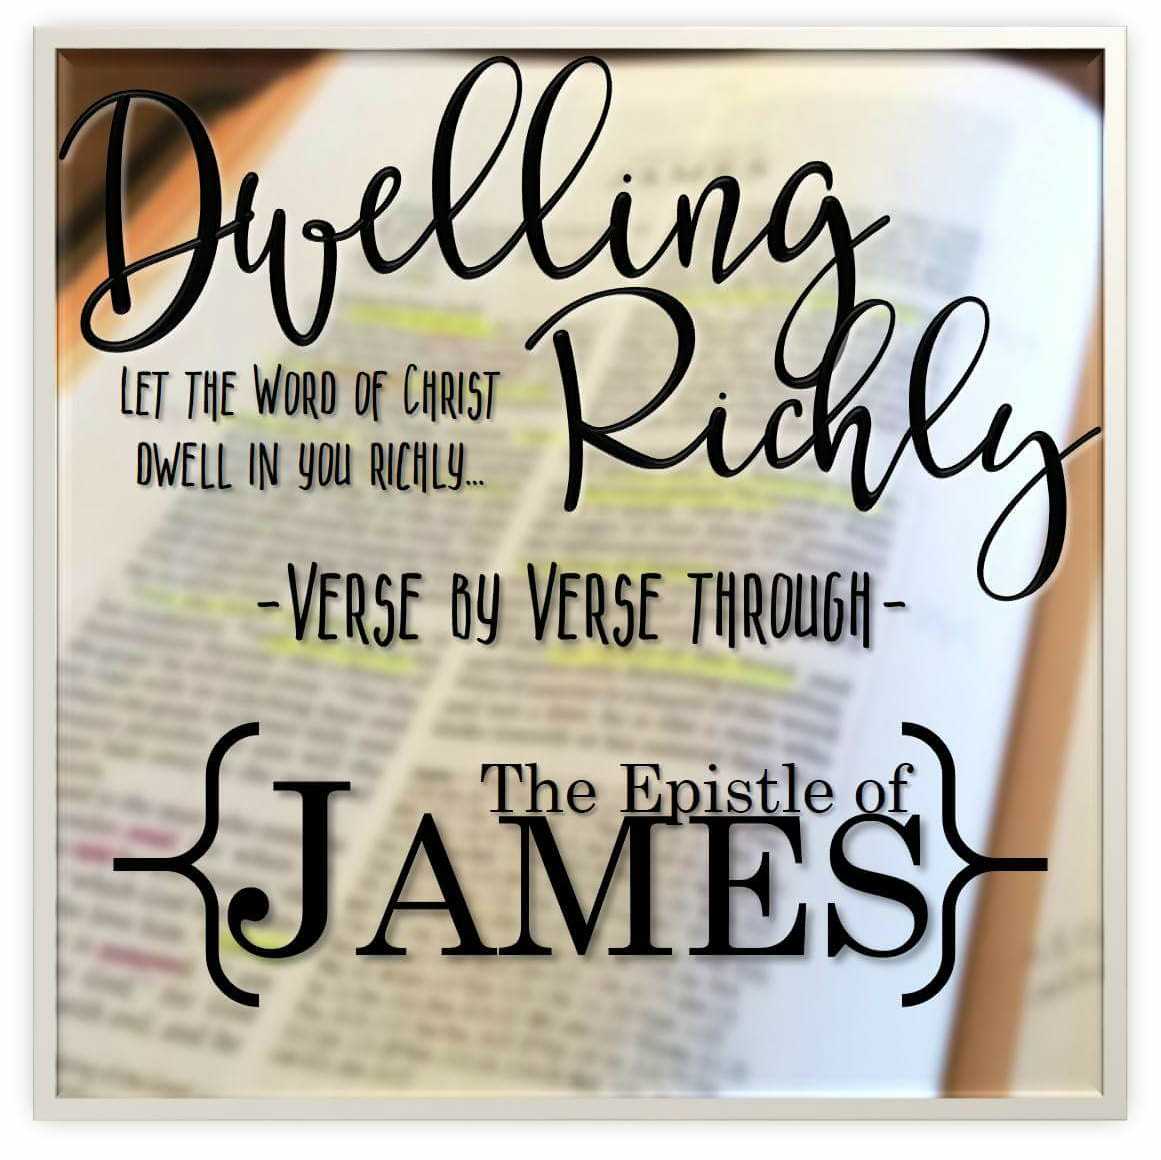 James 4:4-6